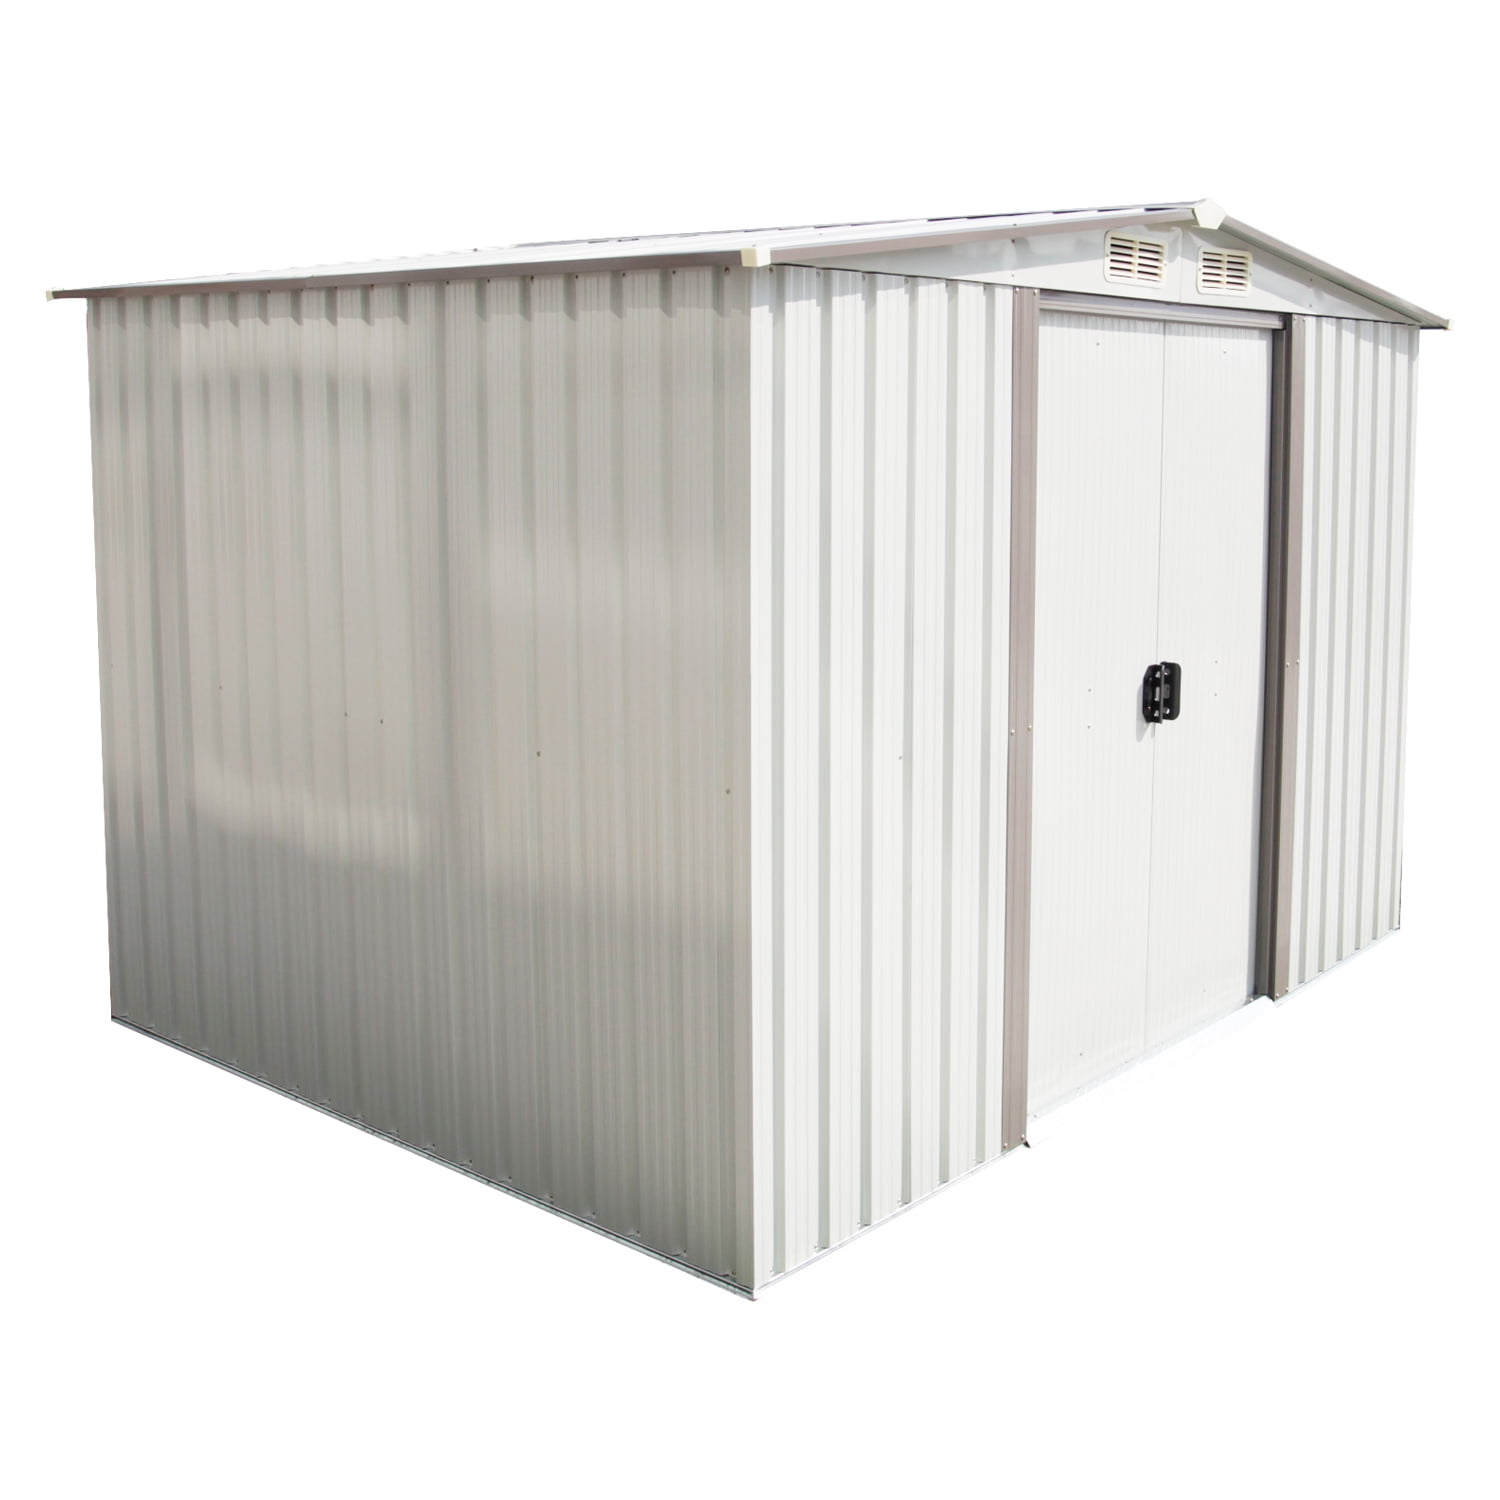 Kinbor New 8'x6' Outdoor White Steel Garden Storage Utility Tool Shed Backyard Lawn Building Garage w/Sliding Door